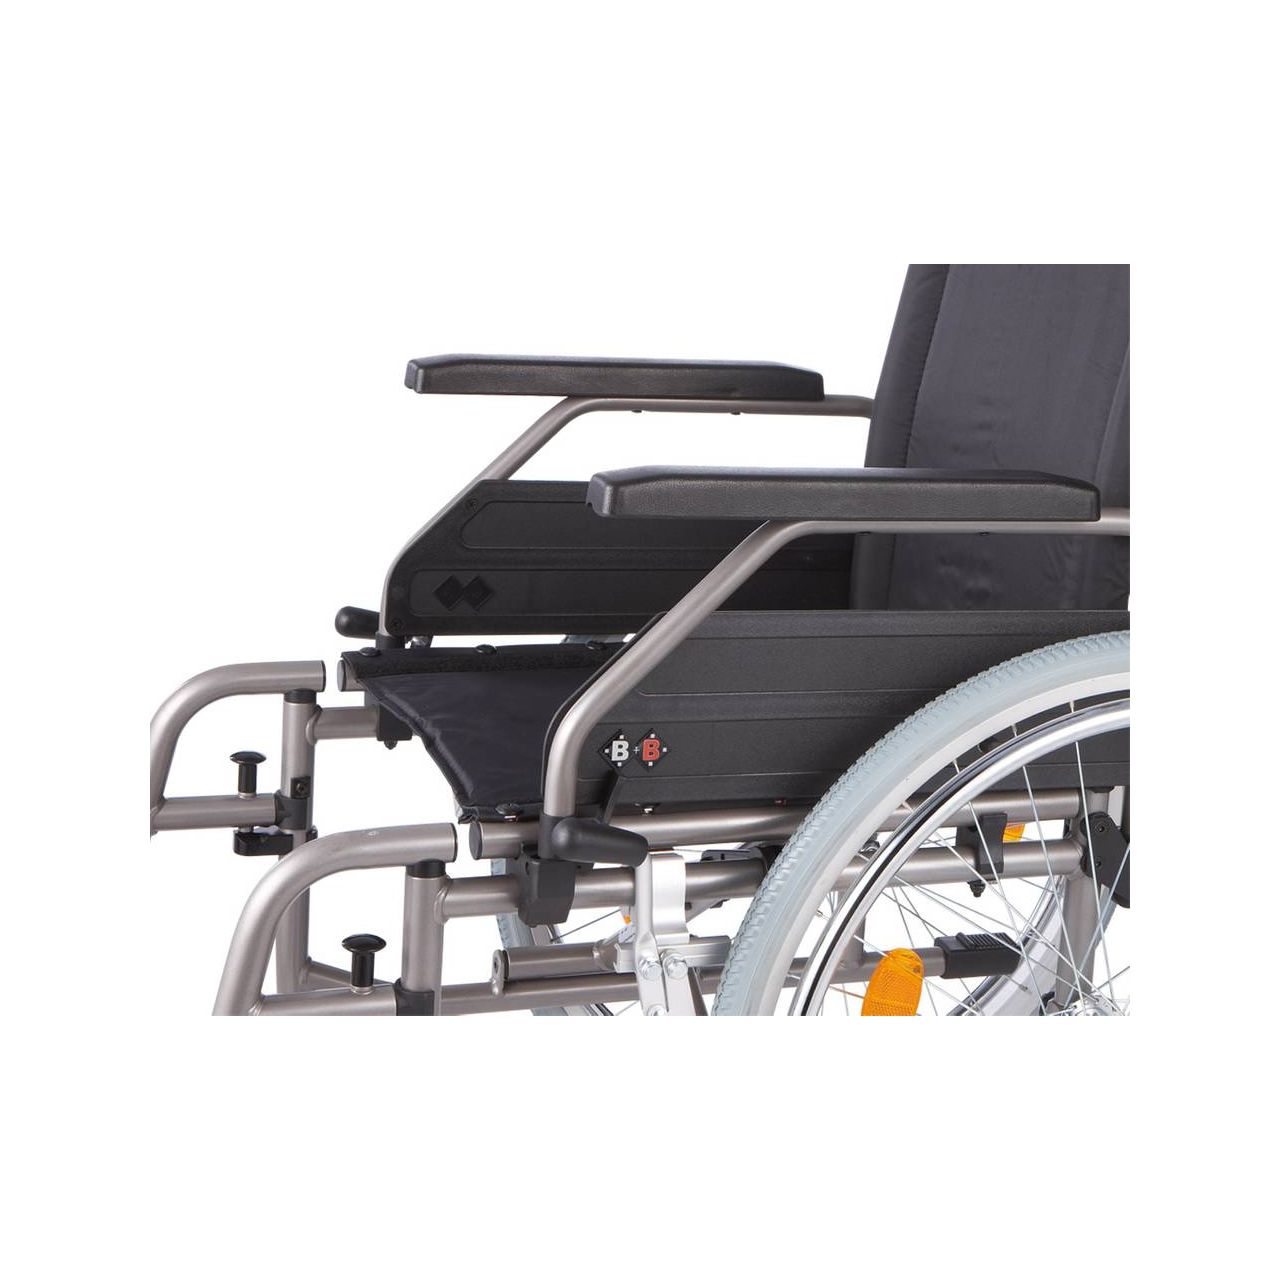 ratastool S-Eco02